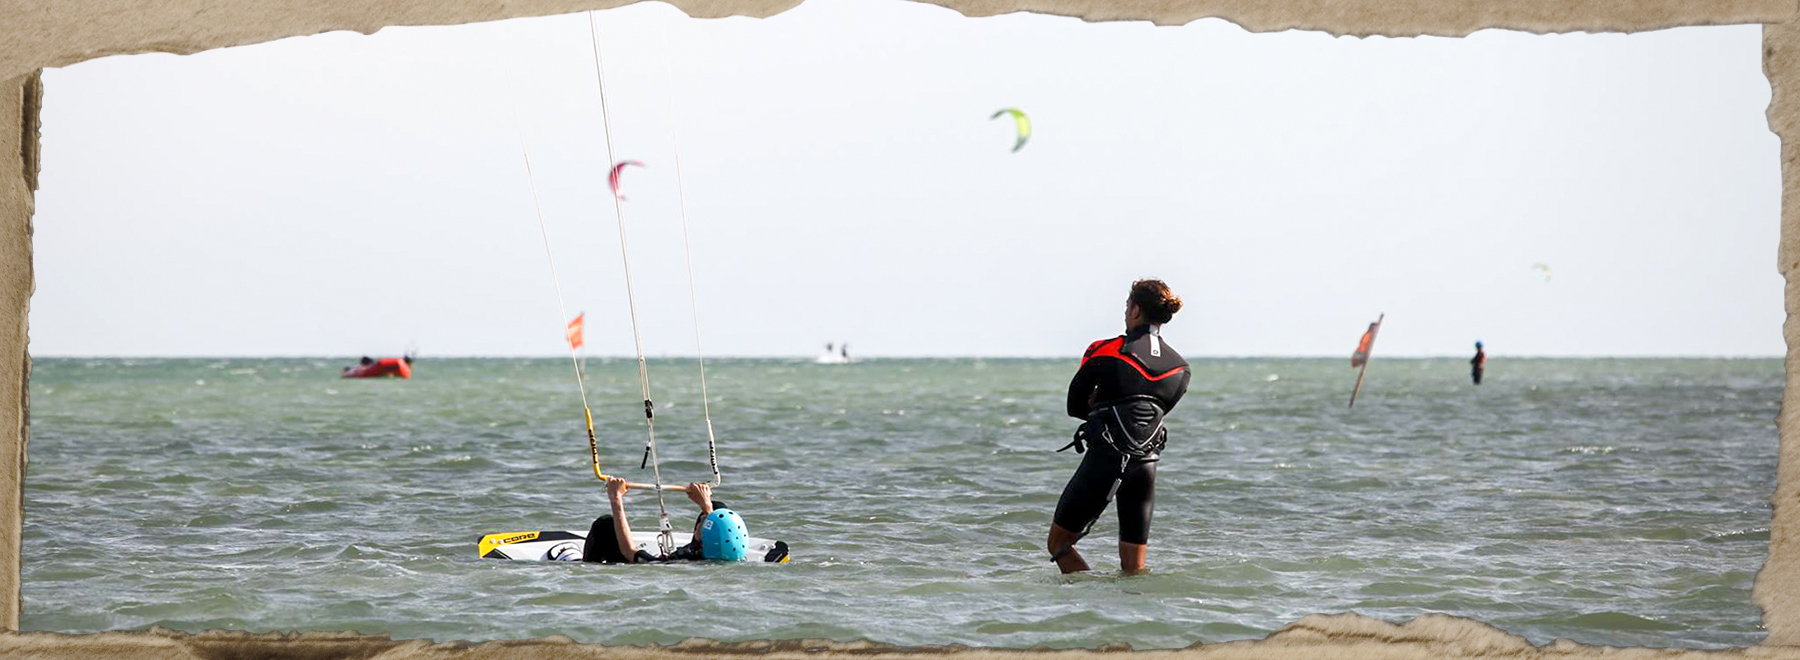 Kitesurfing dating